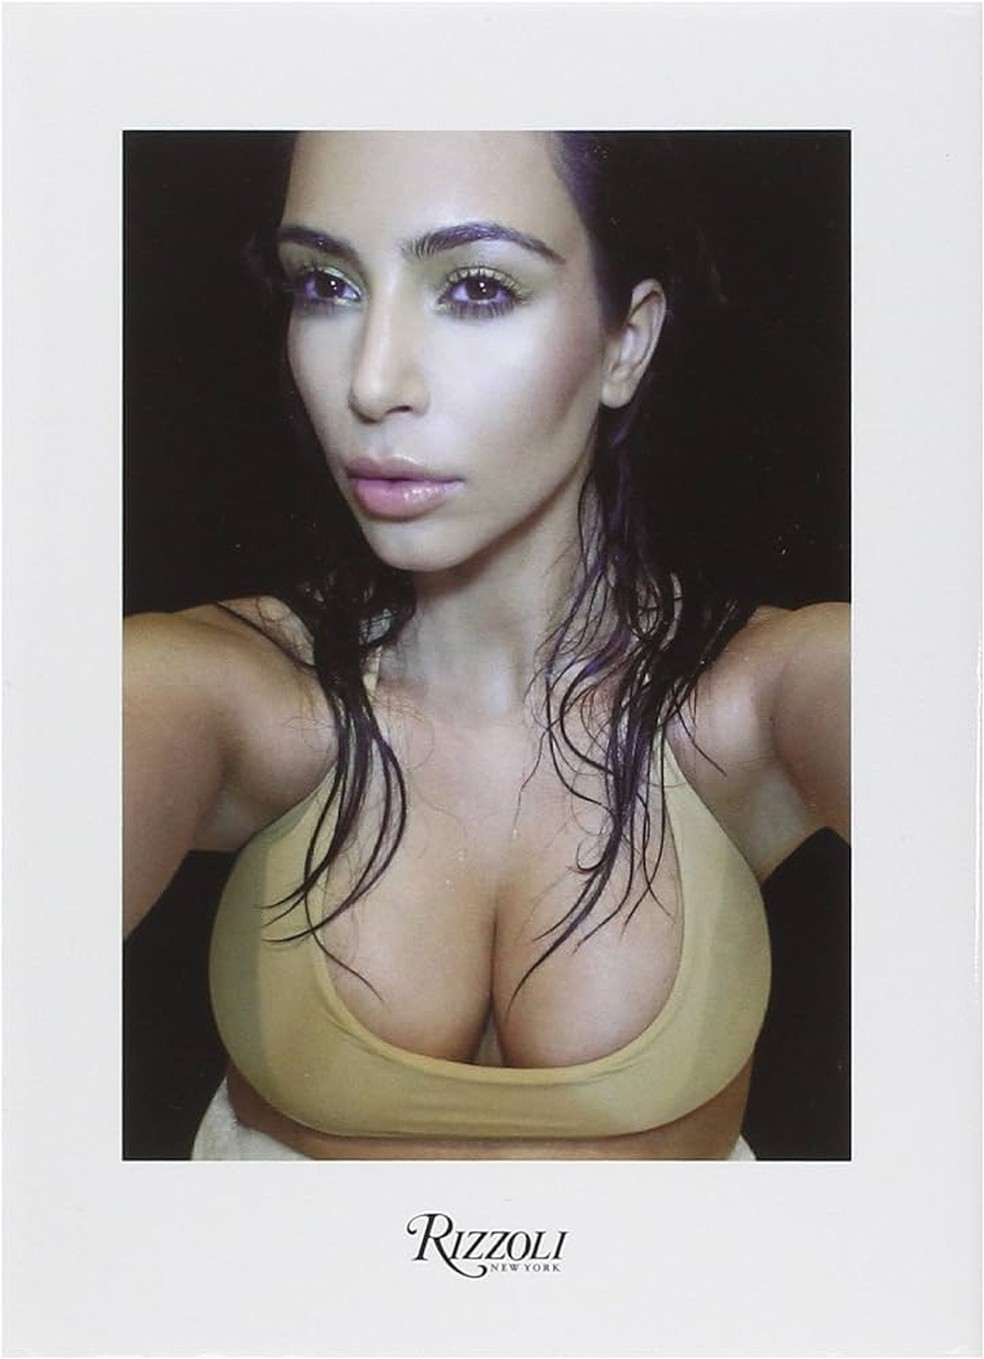 Capa de Selfish, livro de selfies de Kim Kardashian — Foto: Reprodução